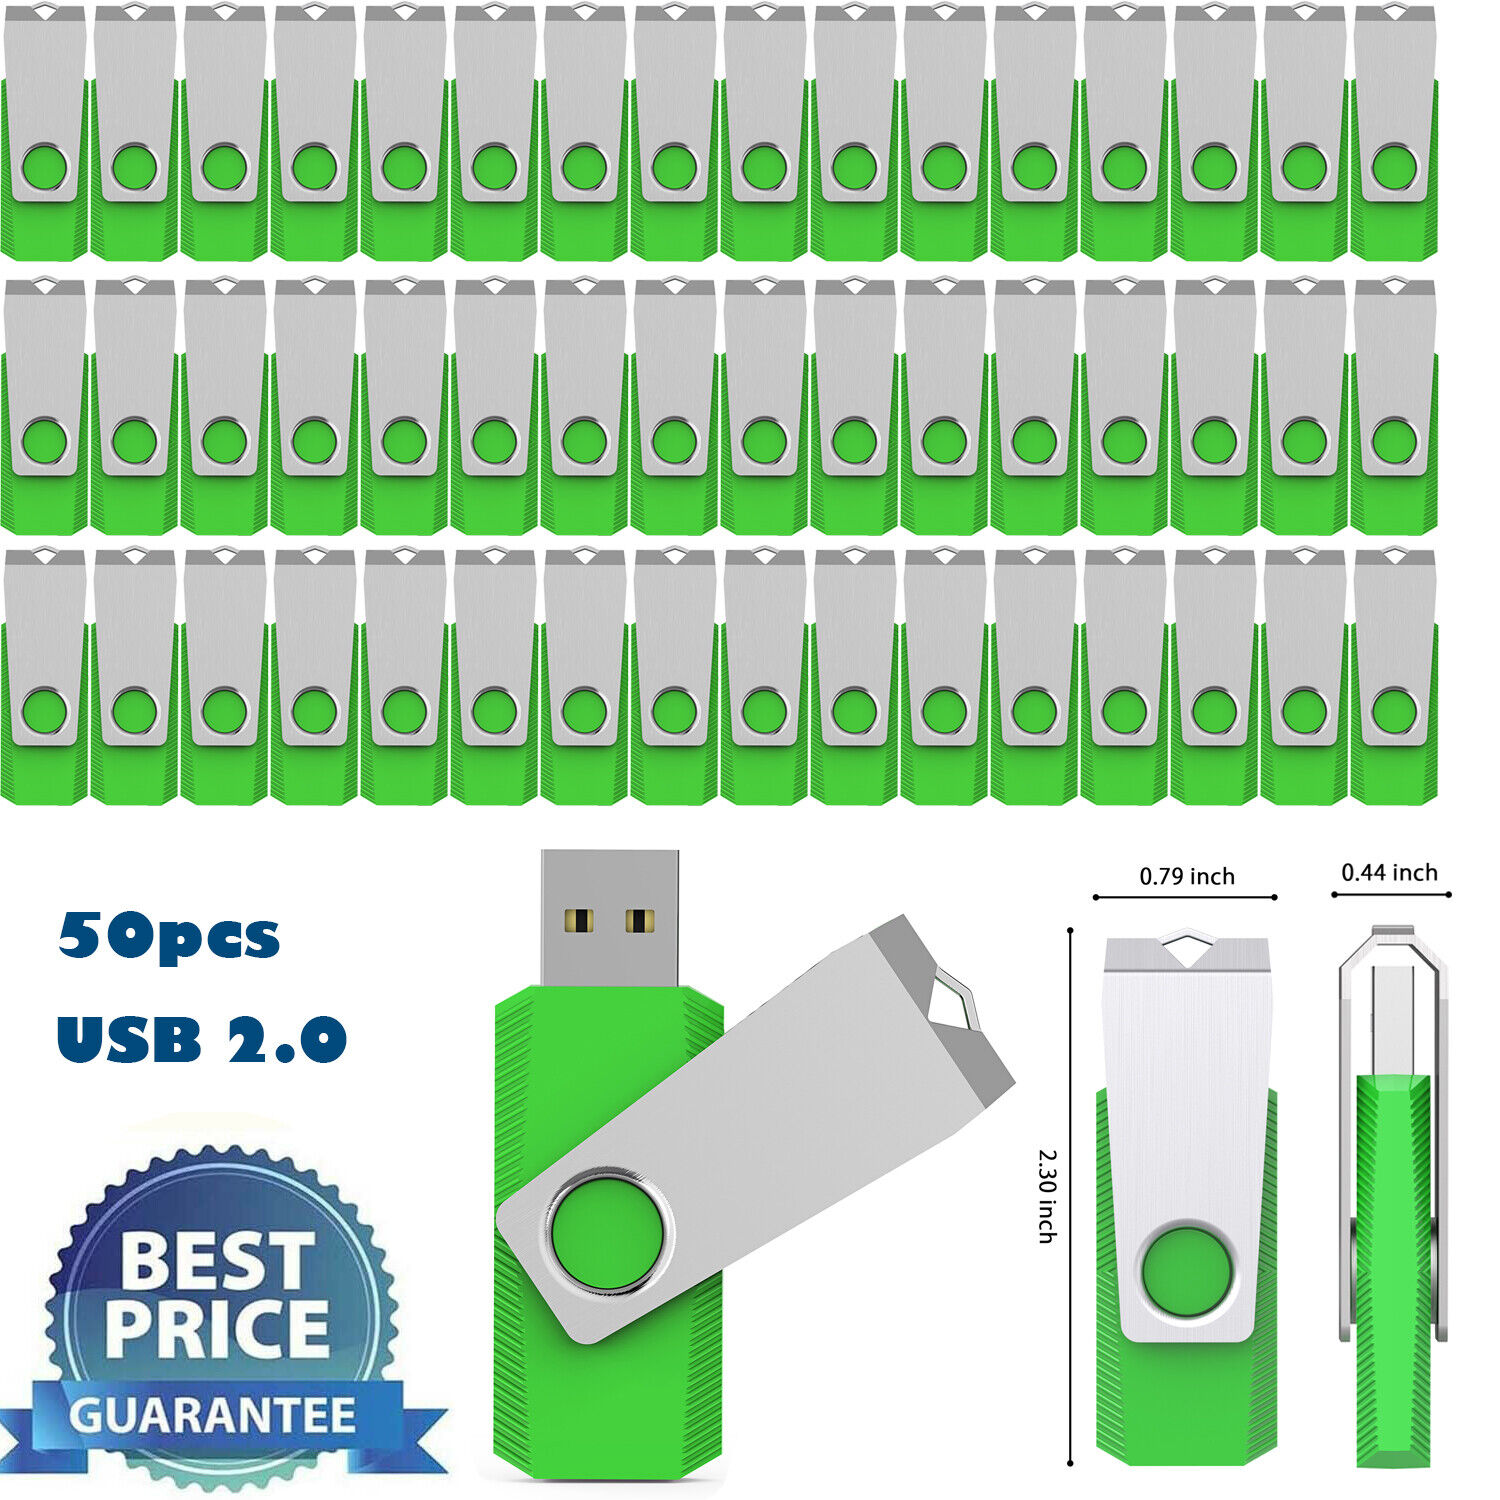 Christmas 50PCS 64GB Metal Swivel USB Flash Drive Memory Stick Thumb Drive Green